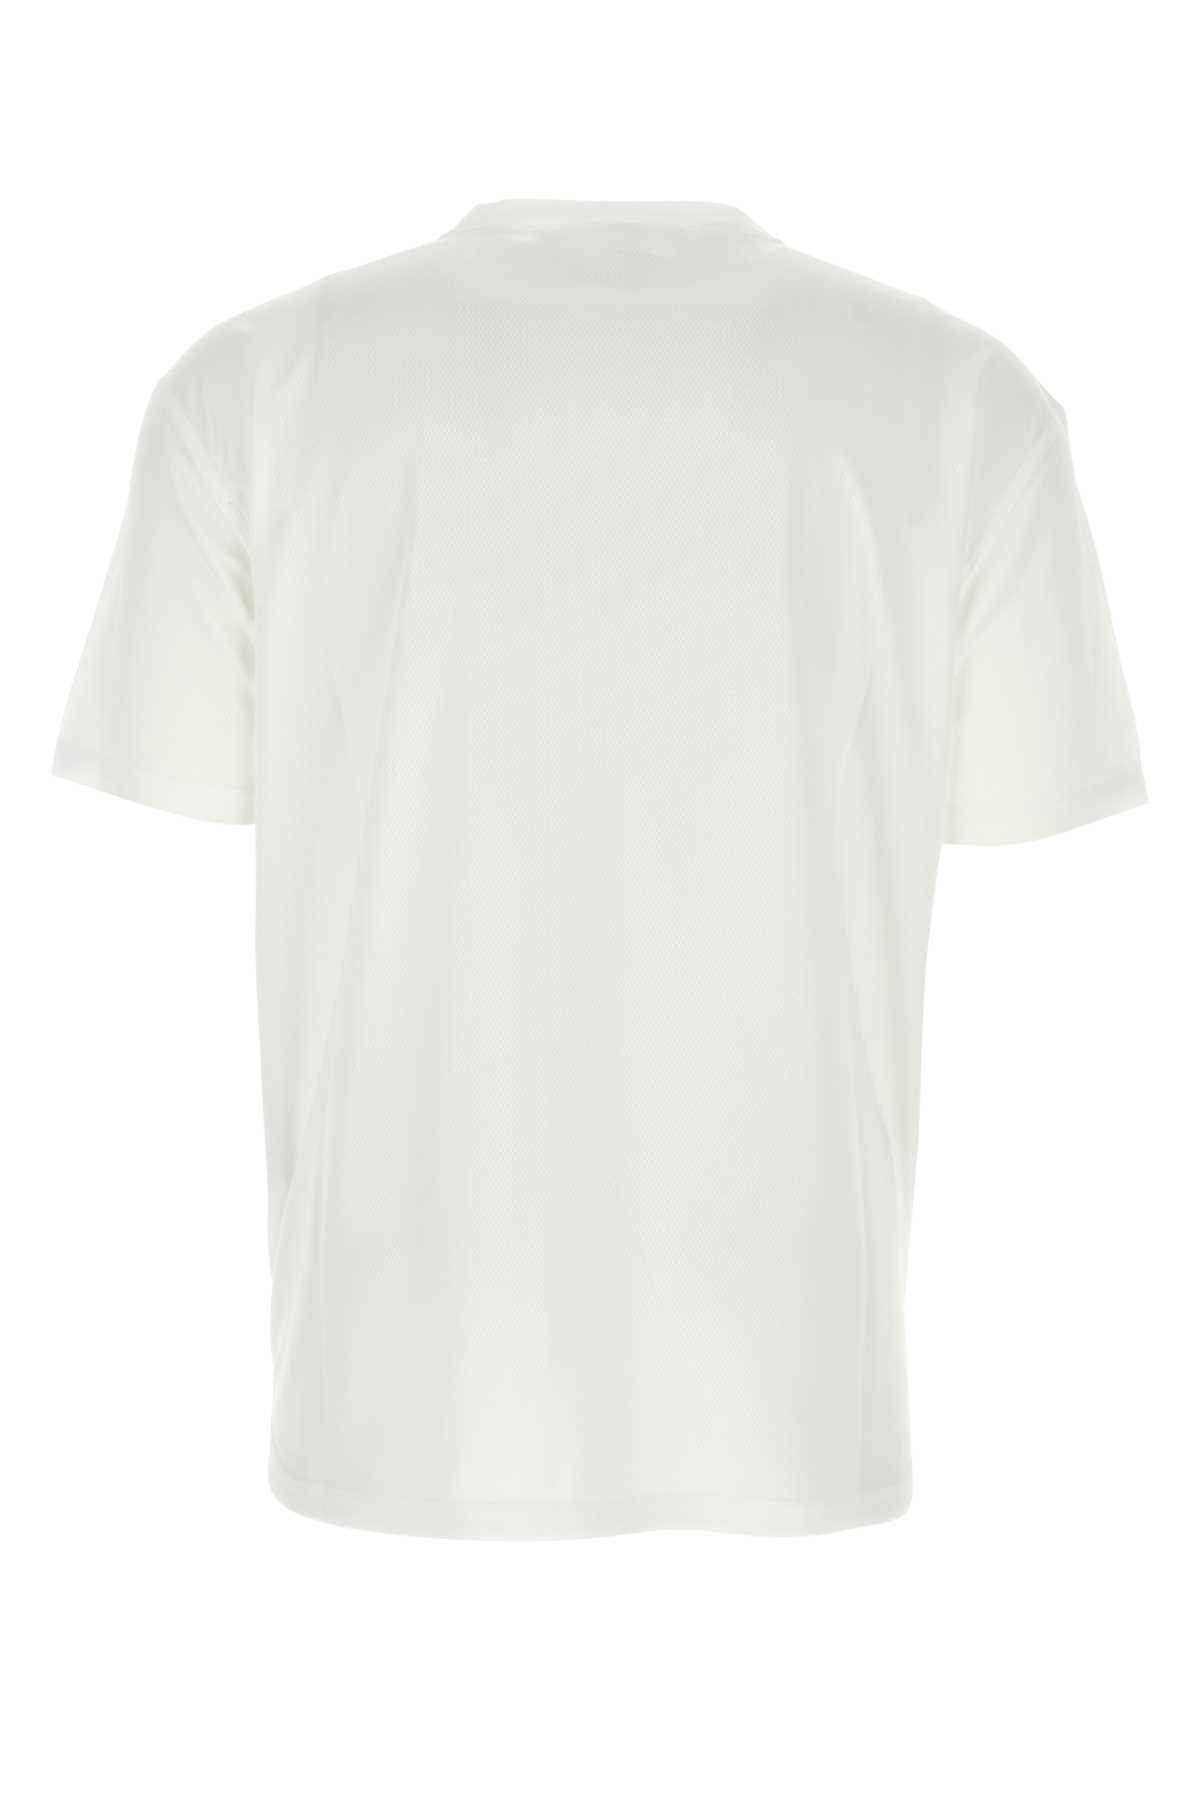 Shop Alyx White Mesh T-shirt